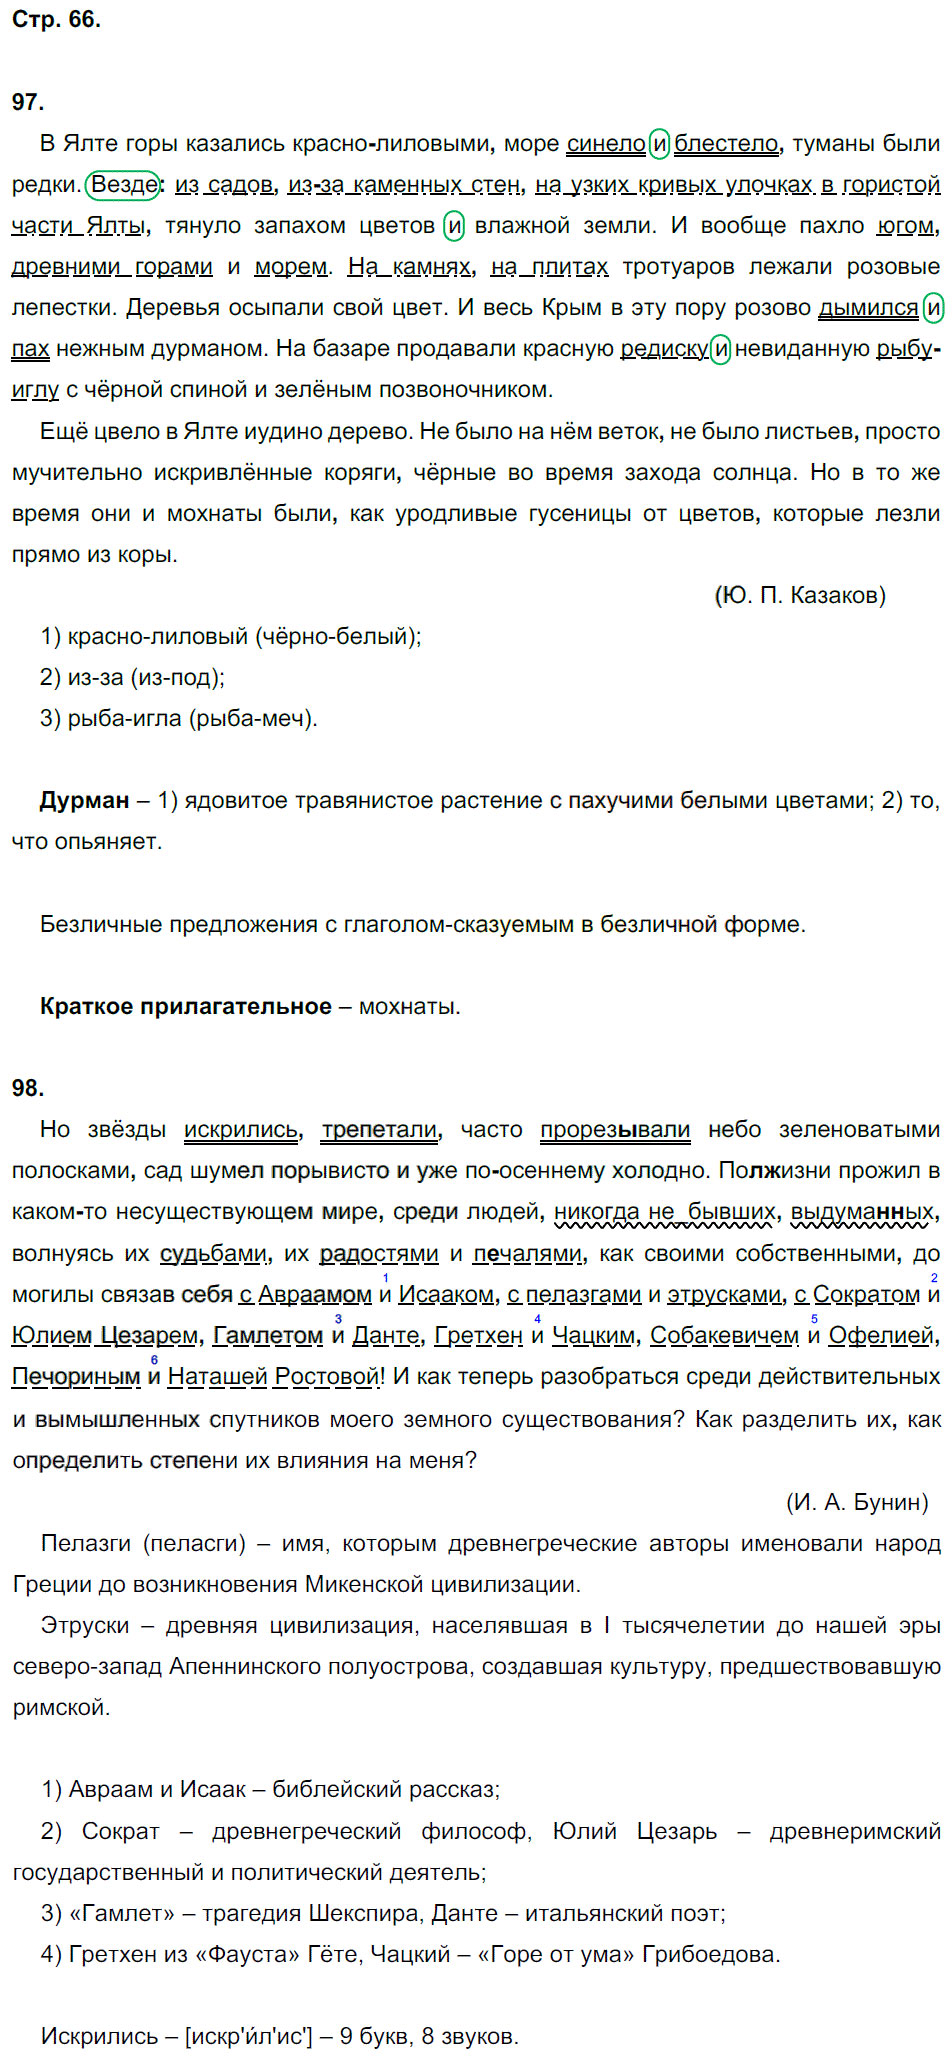 гдз 8 класс рабочая тетрадь страница 66 русский язык Кулаева